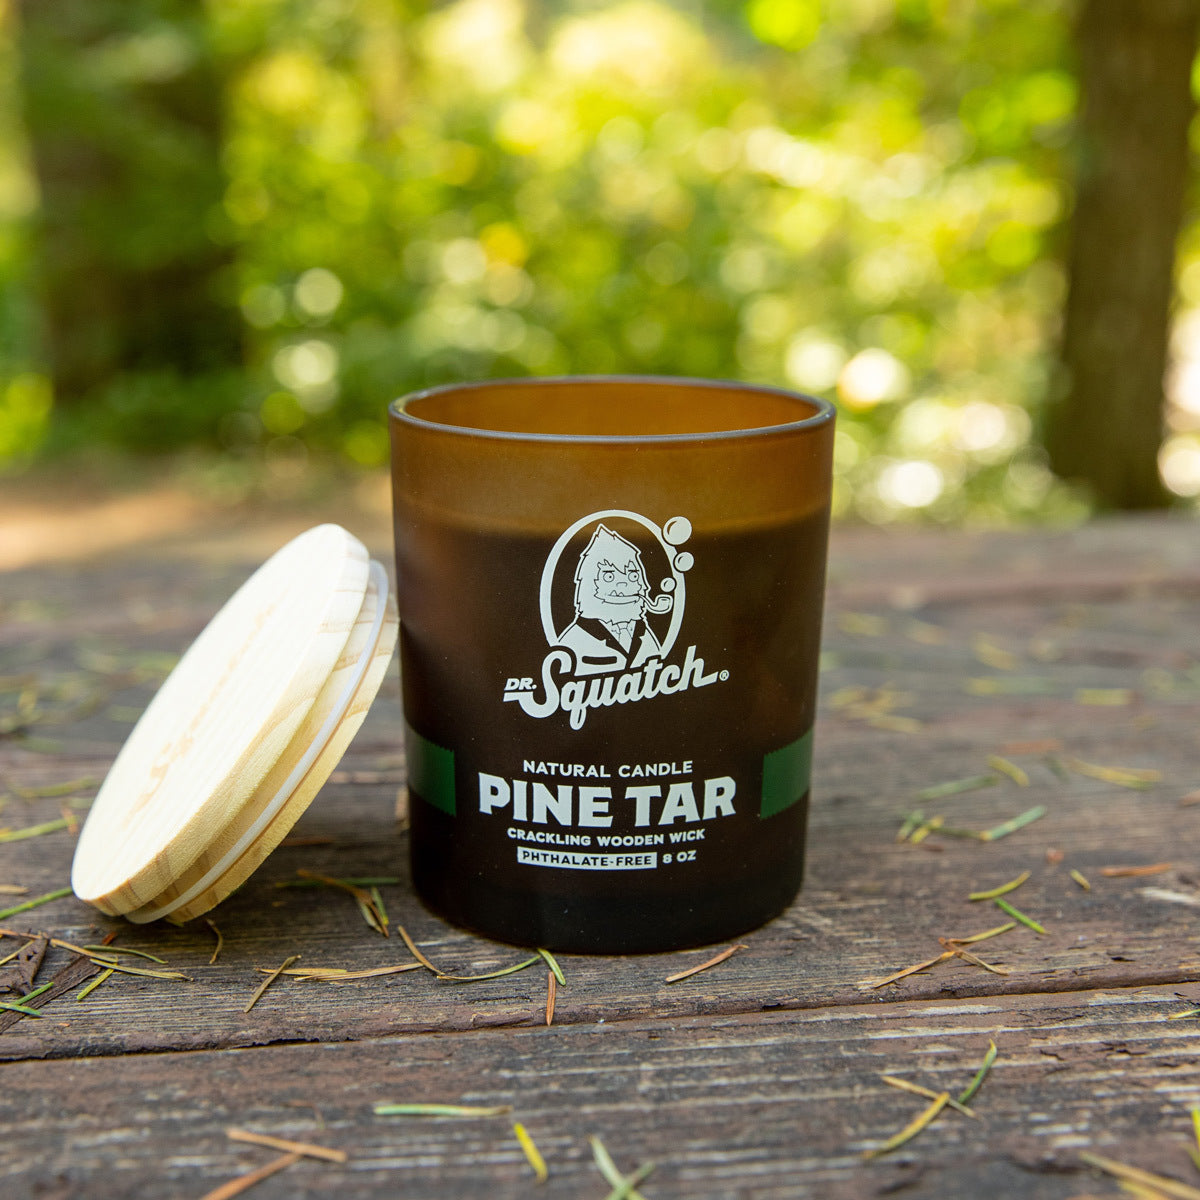 Pine Tar Soap Reviews - Dr Squatch Pine Tar Soap 